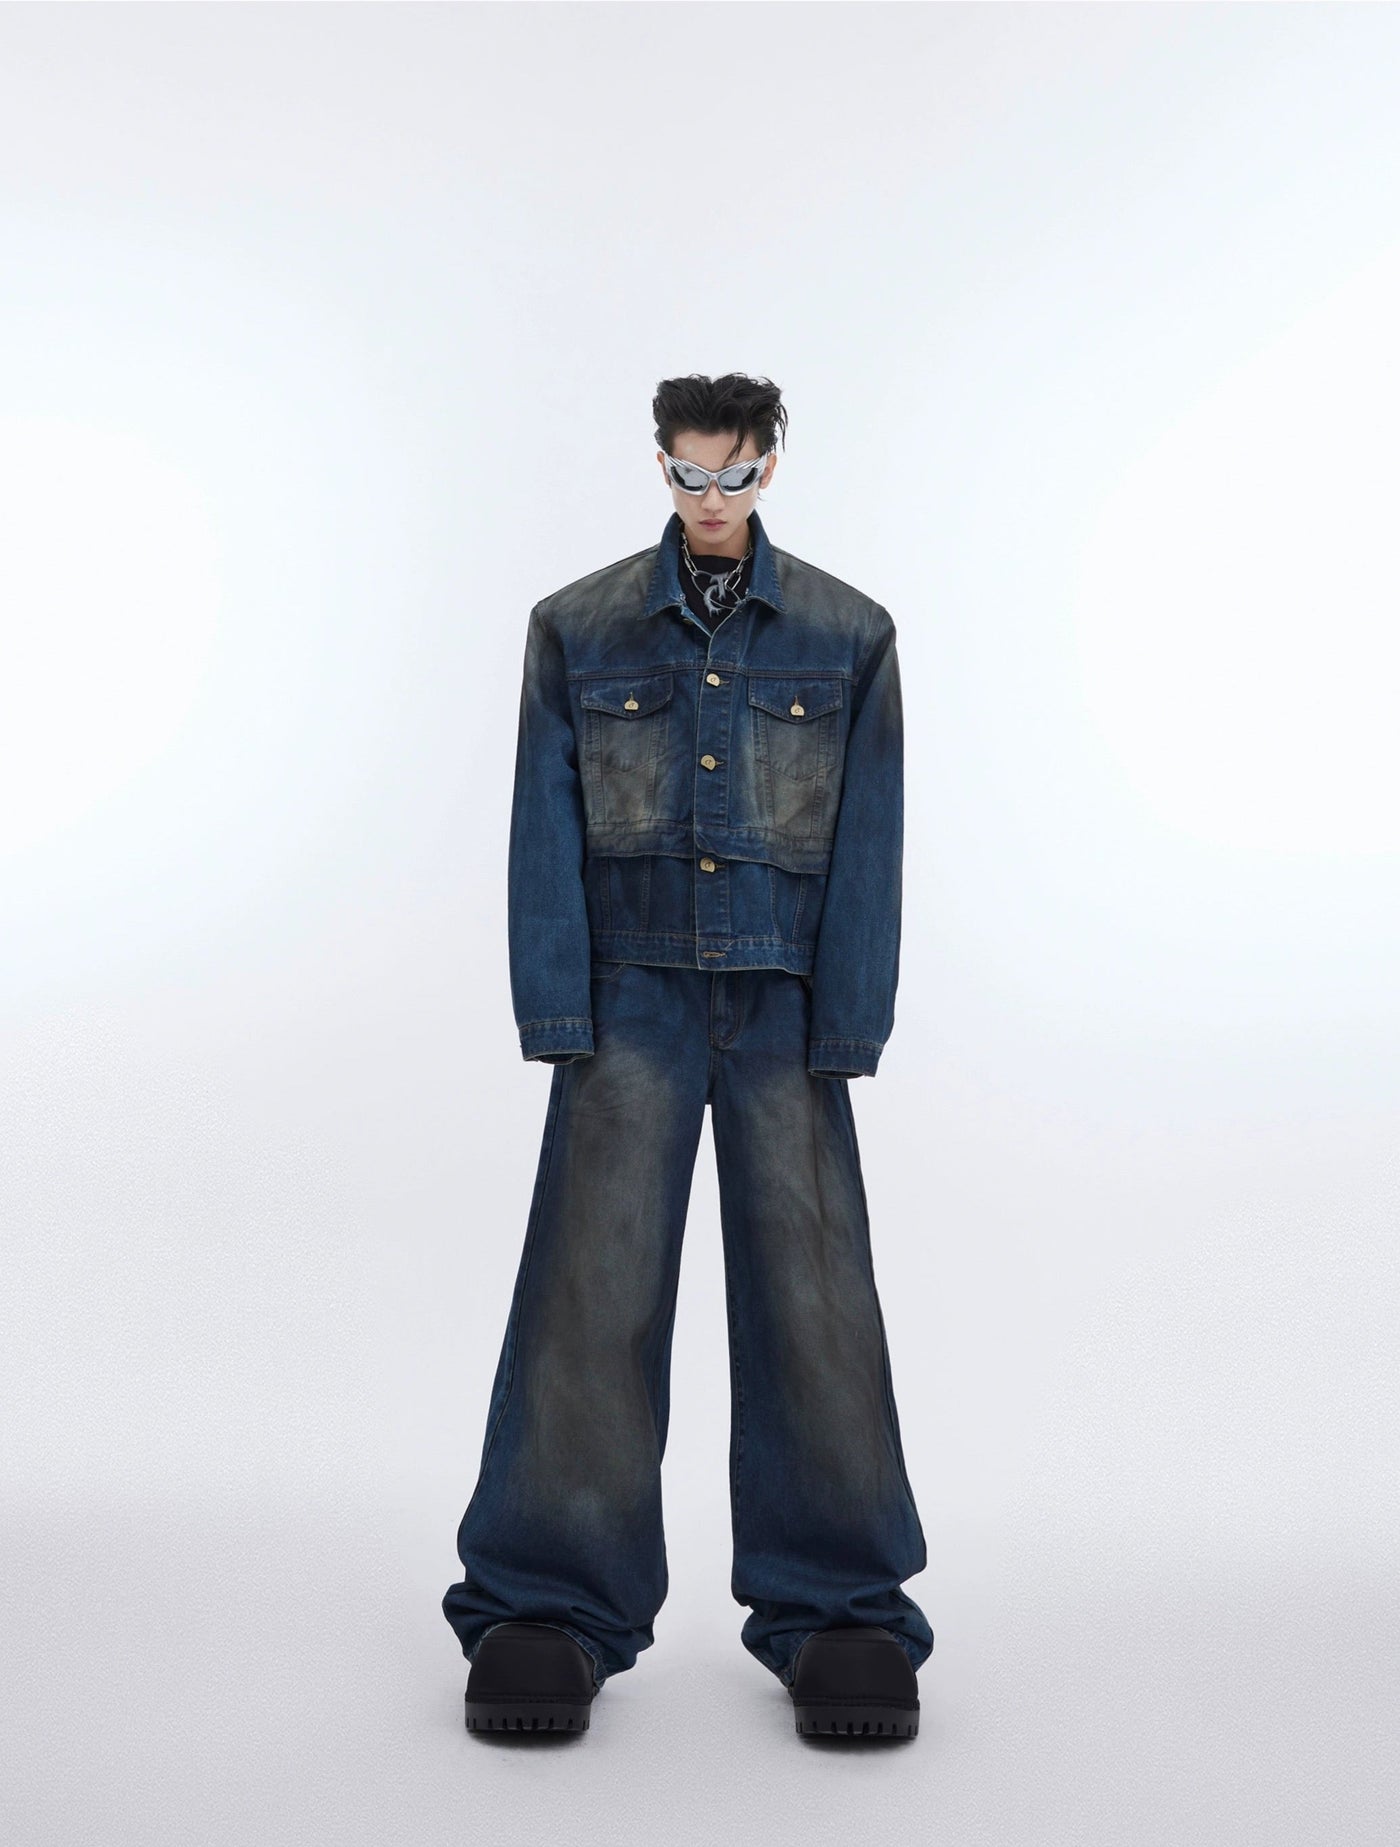 Faded Layered Denim Jacket & Jeans Set Korean Street Fashion Clothing Set By Argue Culture Shop Online at OH Vault